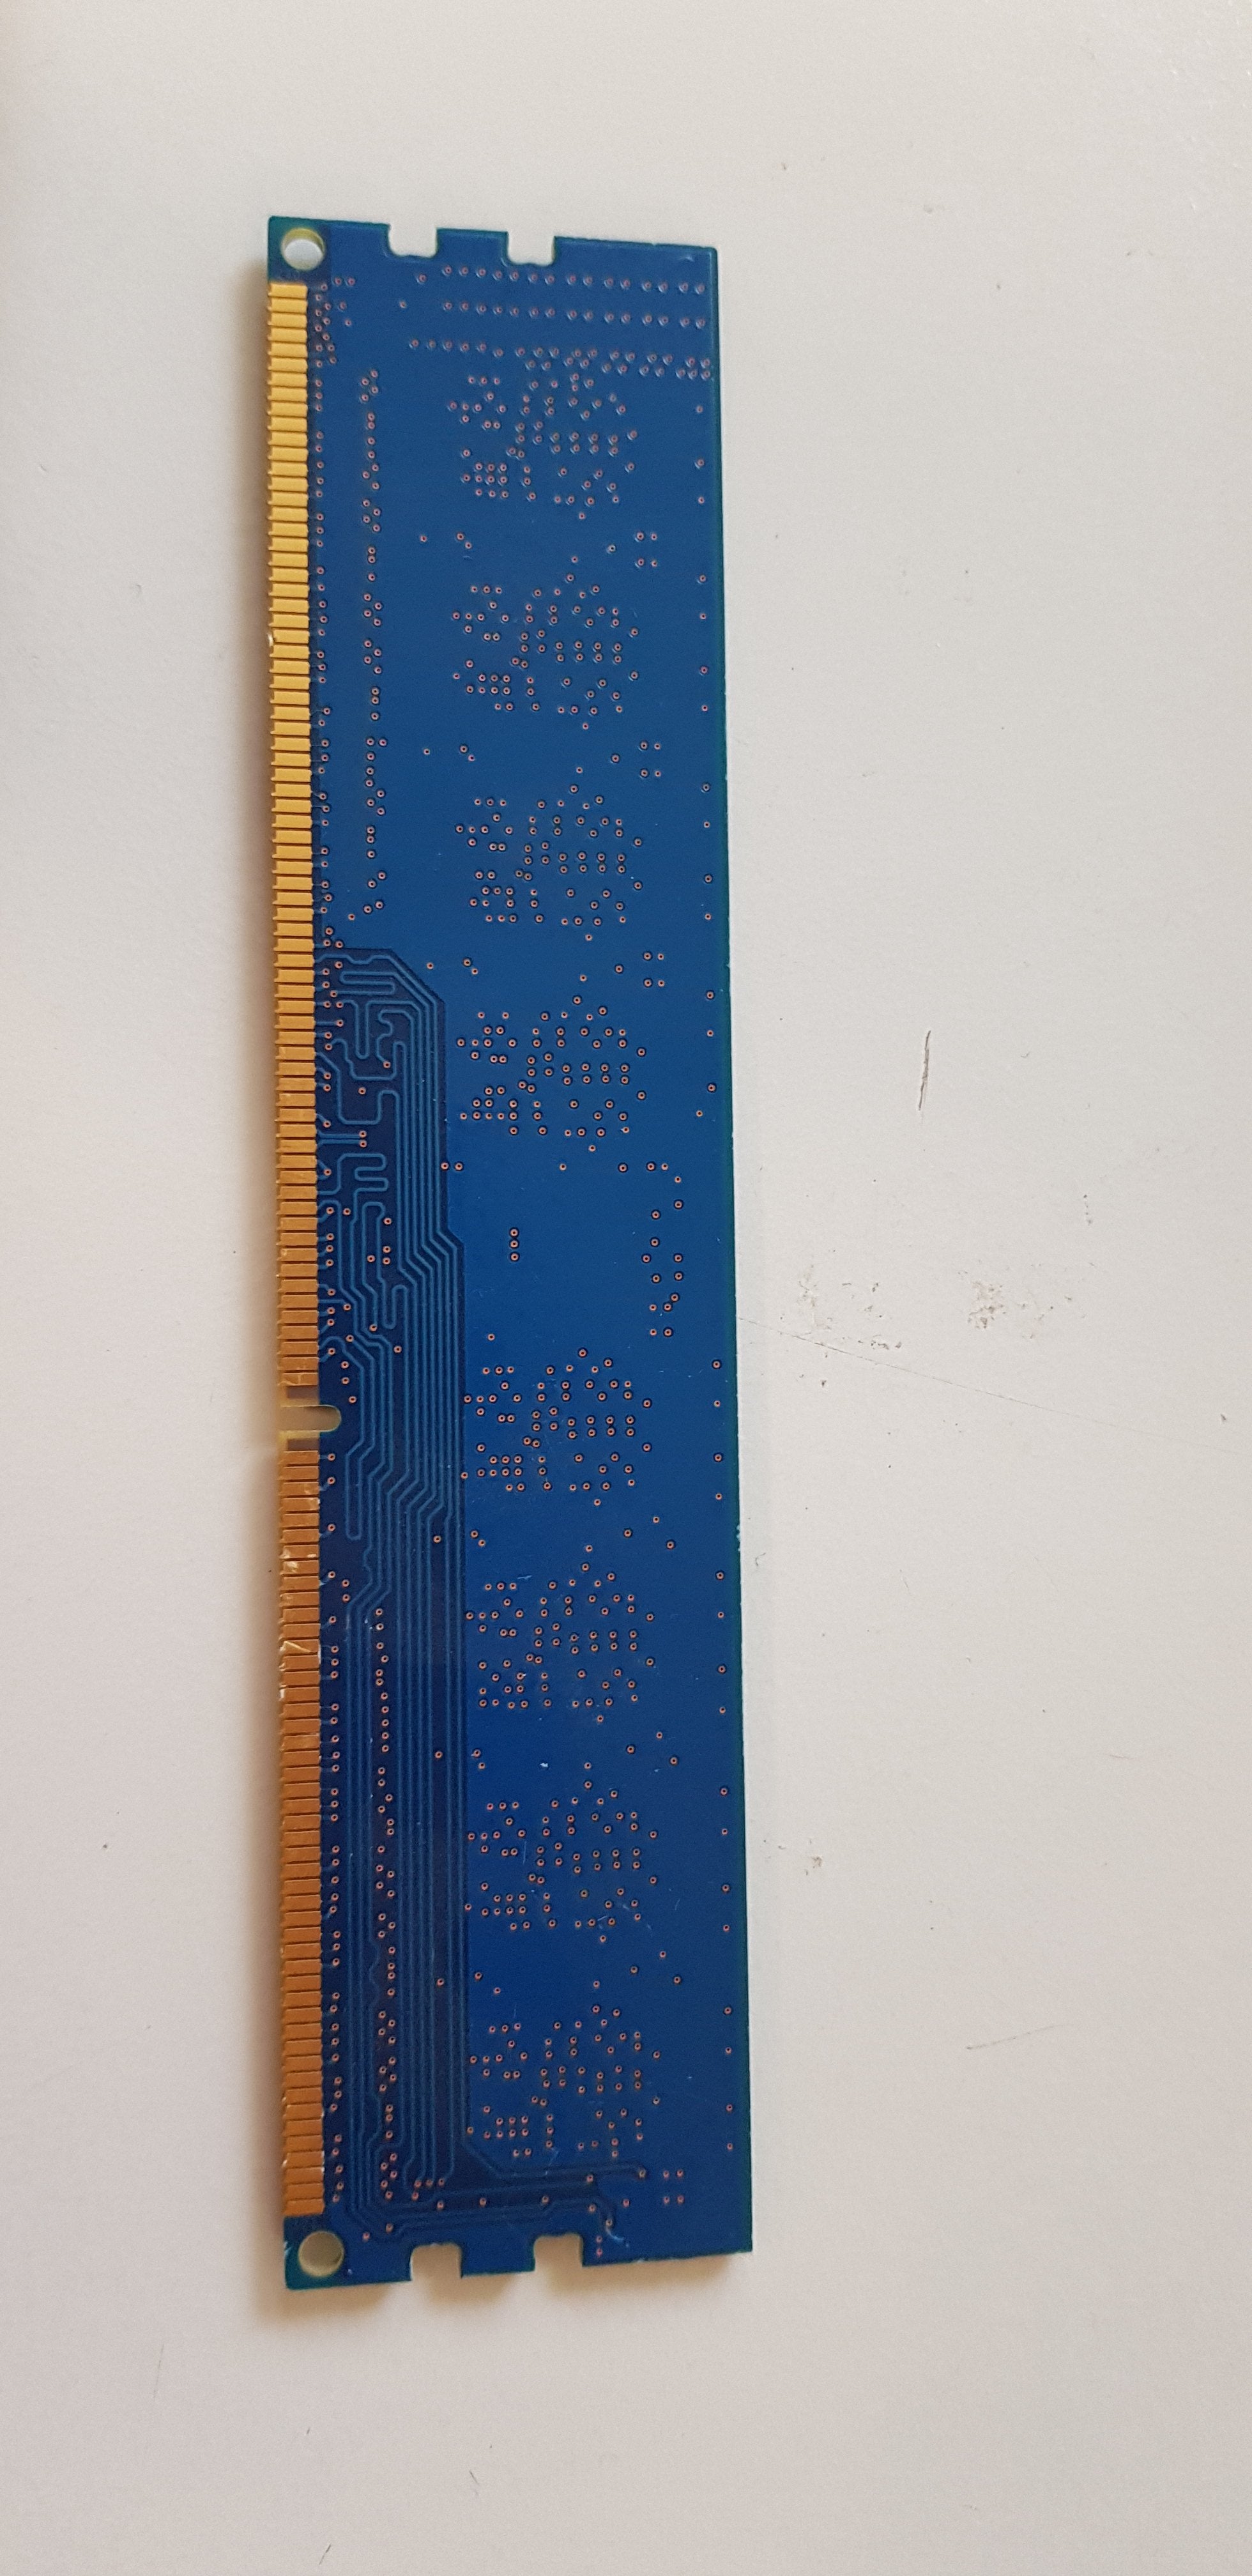 Elpida 1GB 1Rx8 PC3-10600U 240Pin CL9 DDR3 UDIMM Memory Module (EBJ10UE8BDF0-DJ-F)